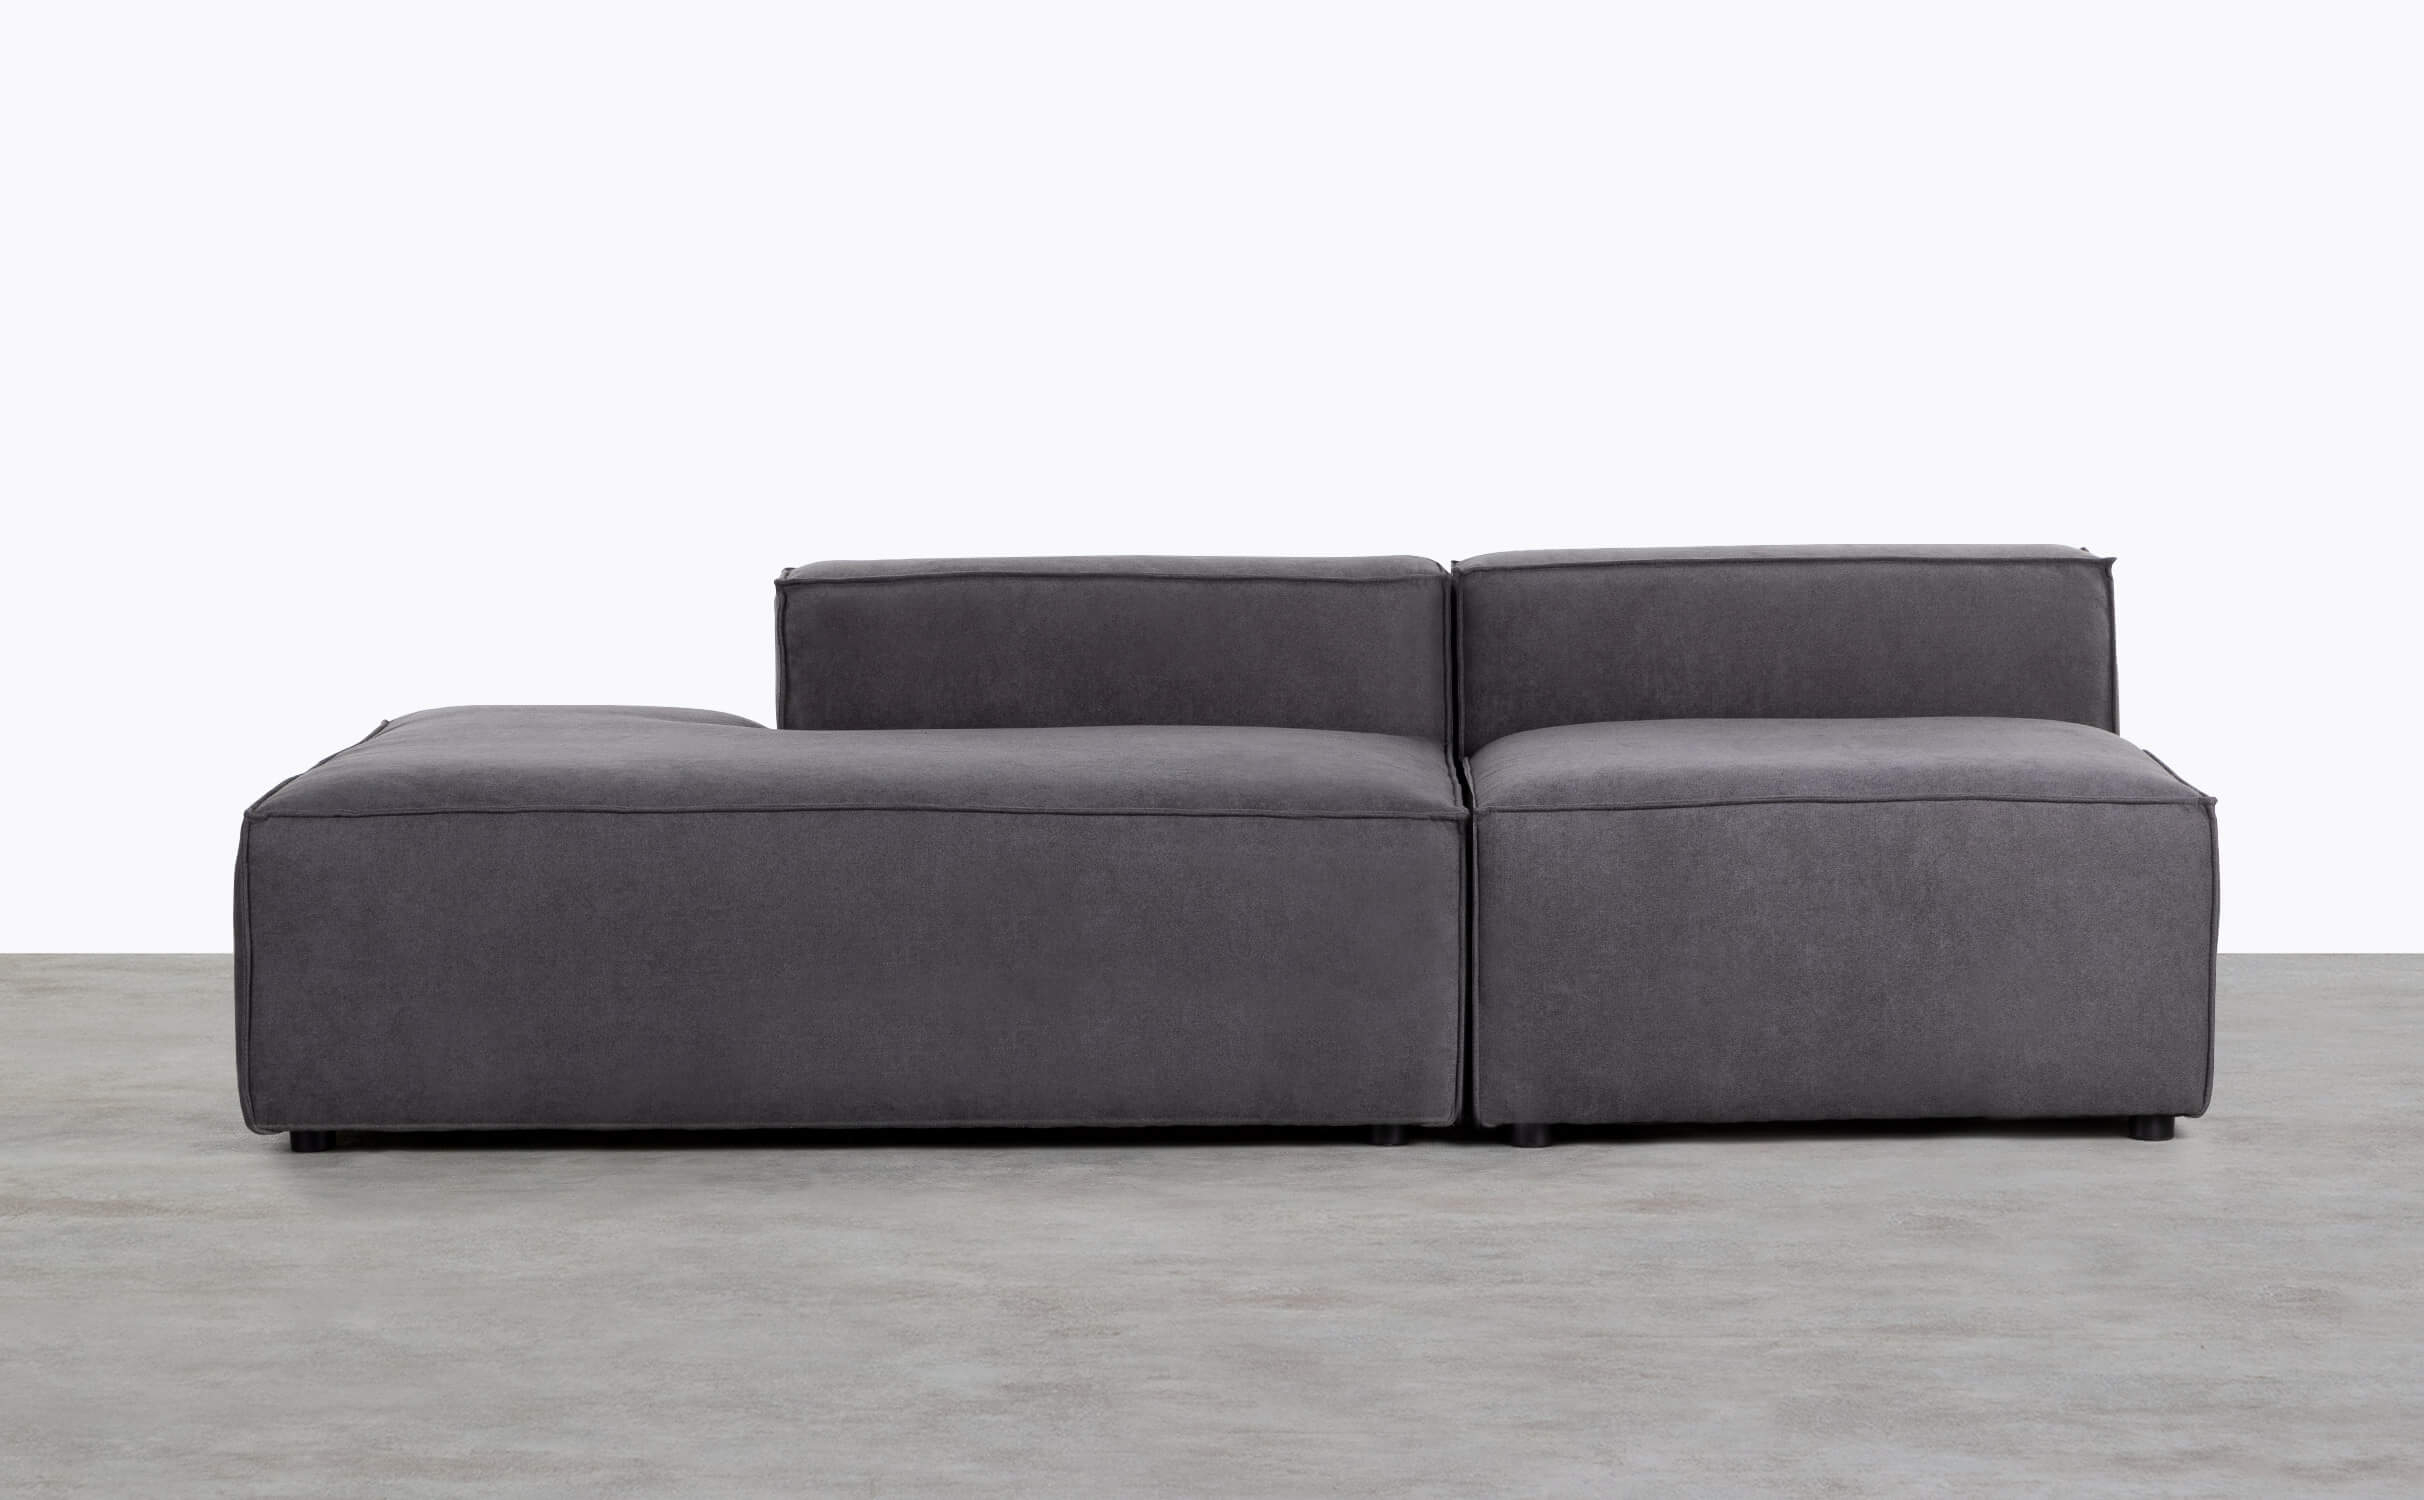 Jordan XL 2-tlg. modulares Sofa, Sessel und Diwan aus Stoff, Galeriebild 1